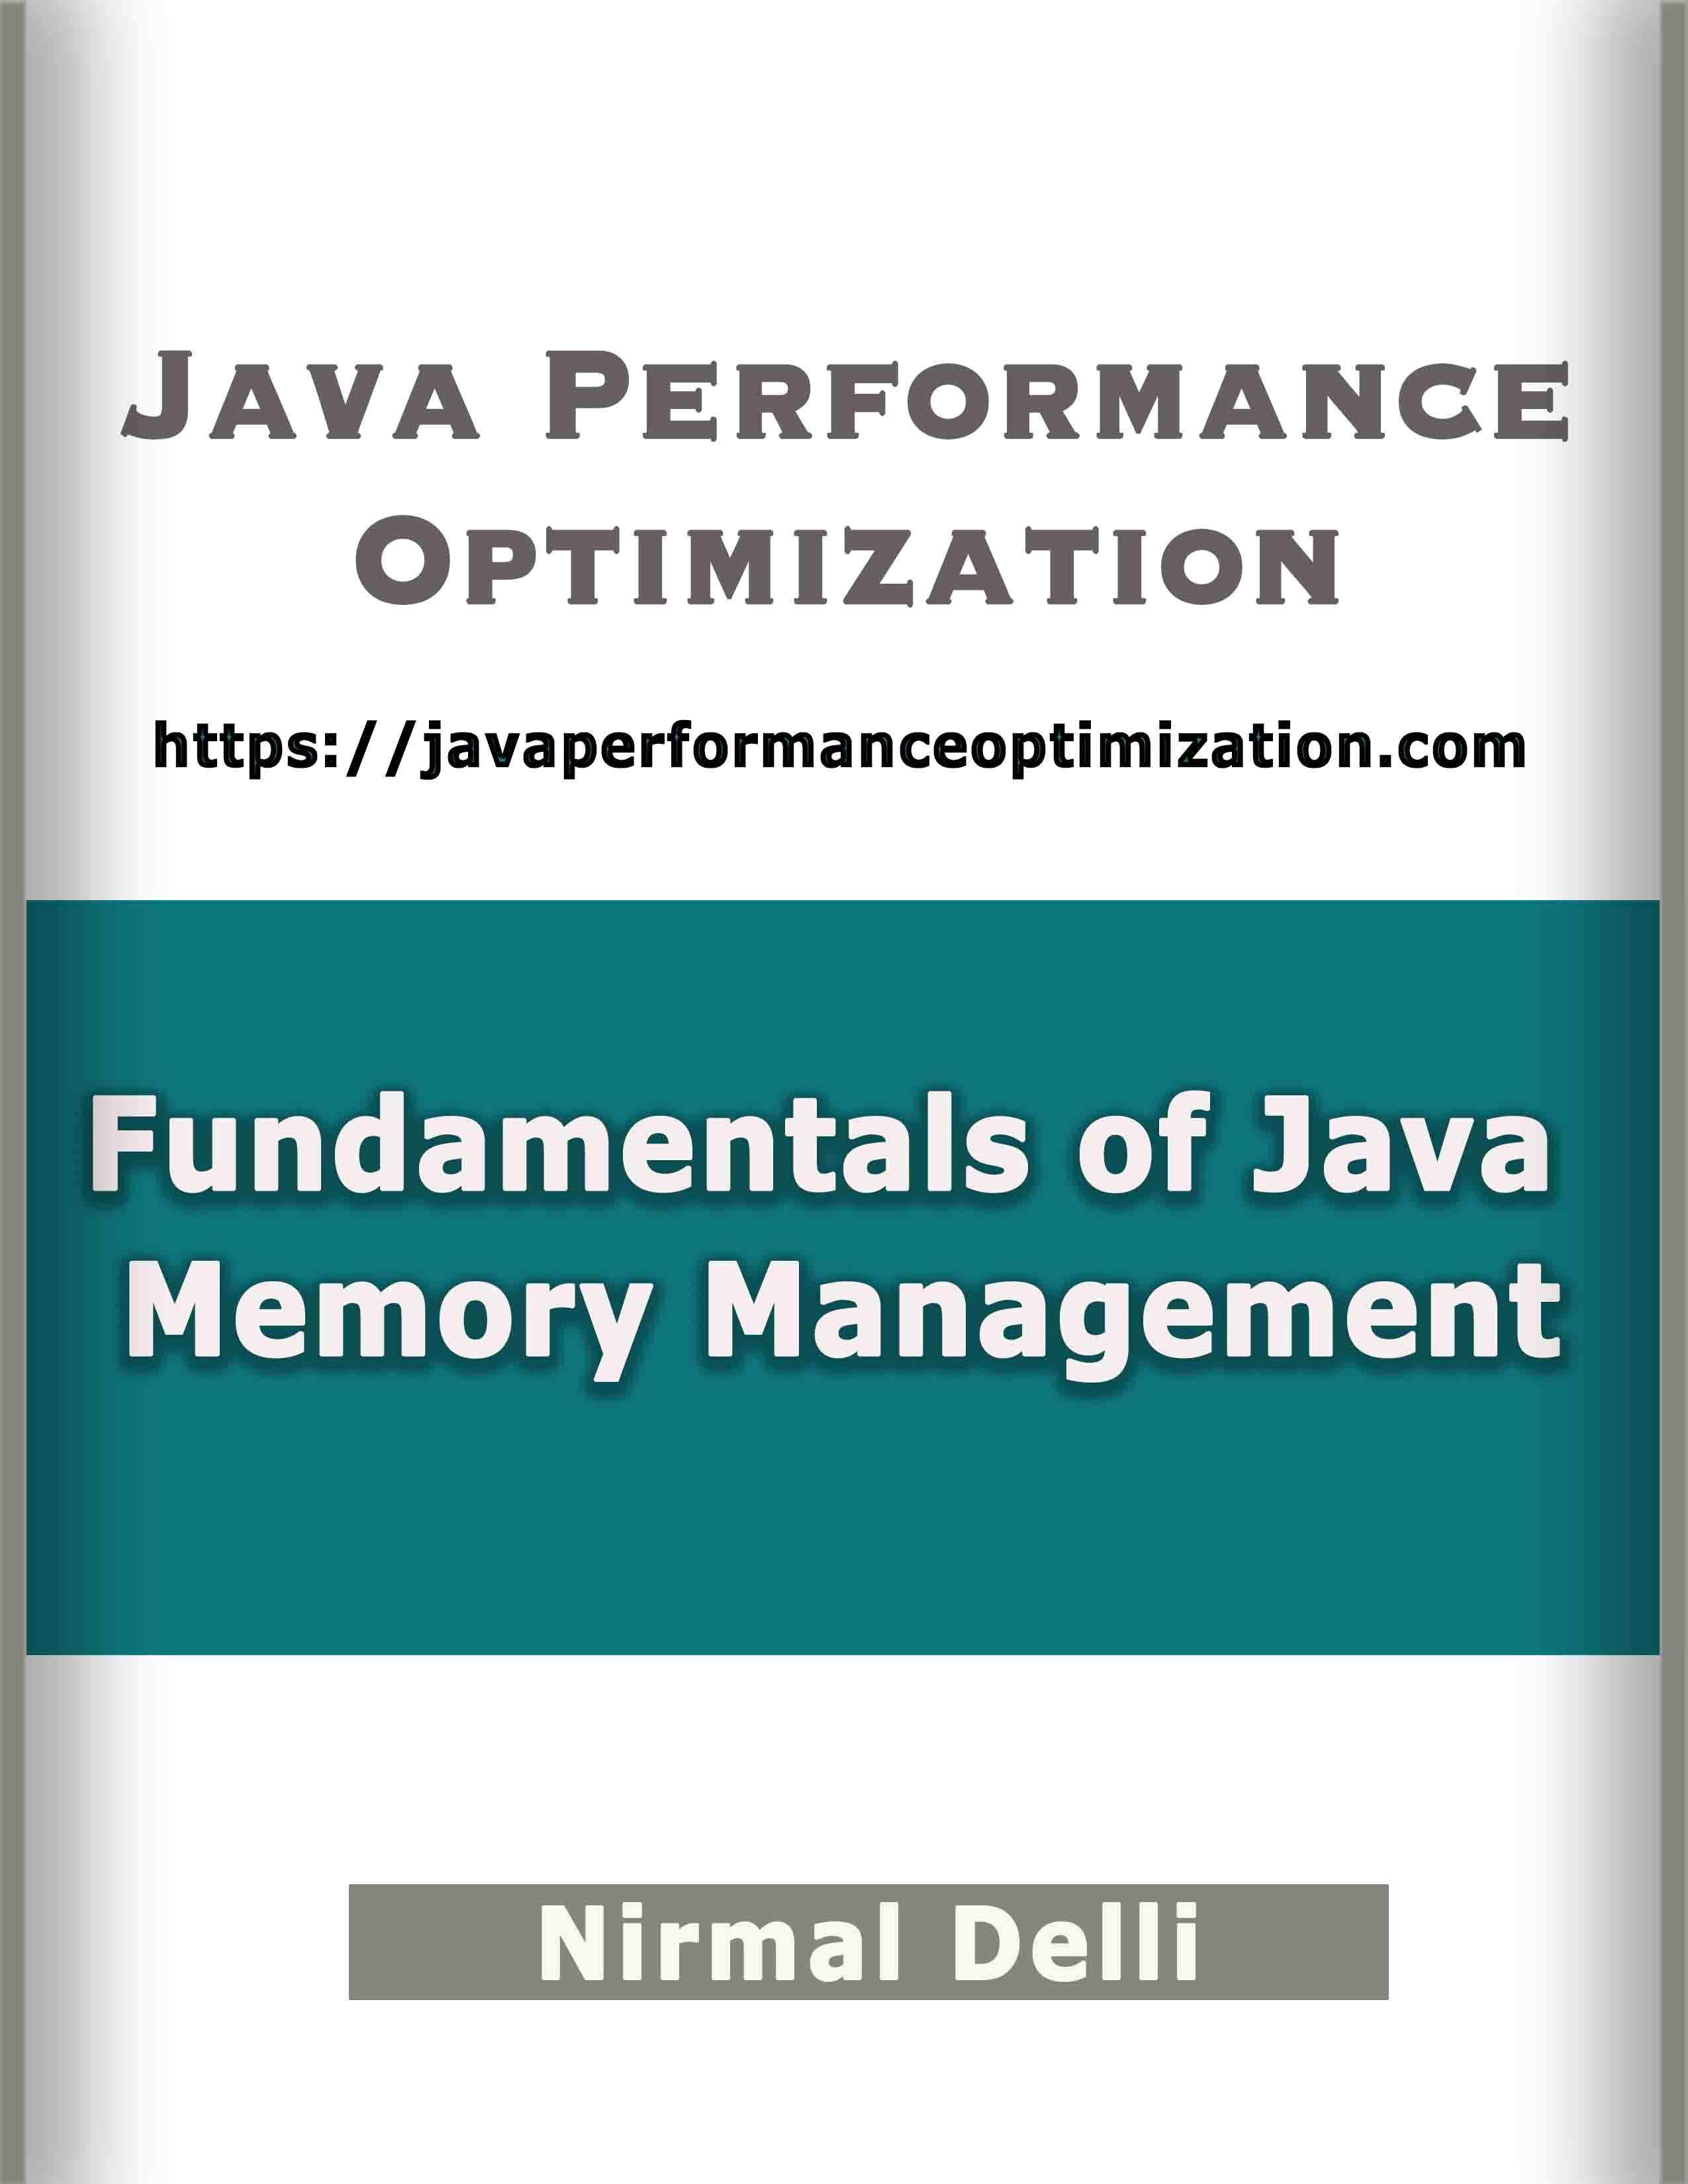 Java performance optimization - Fundamentals of Java Memory Management